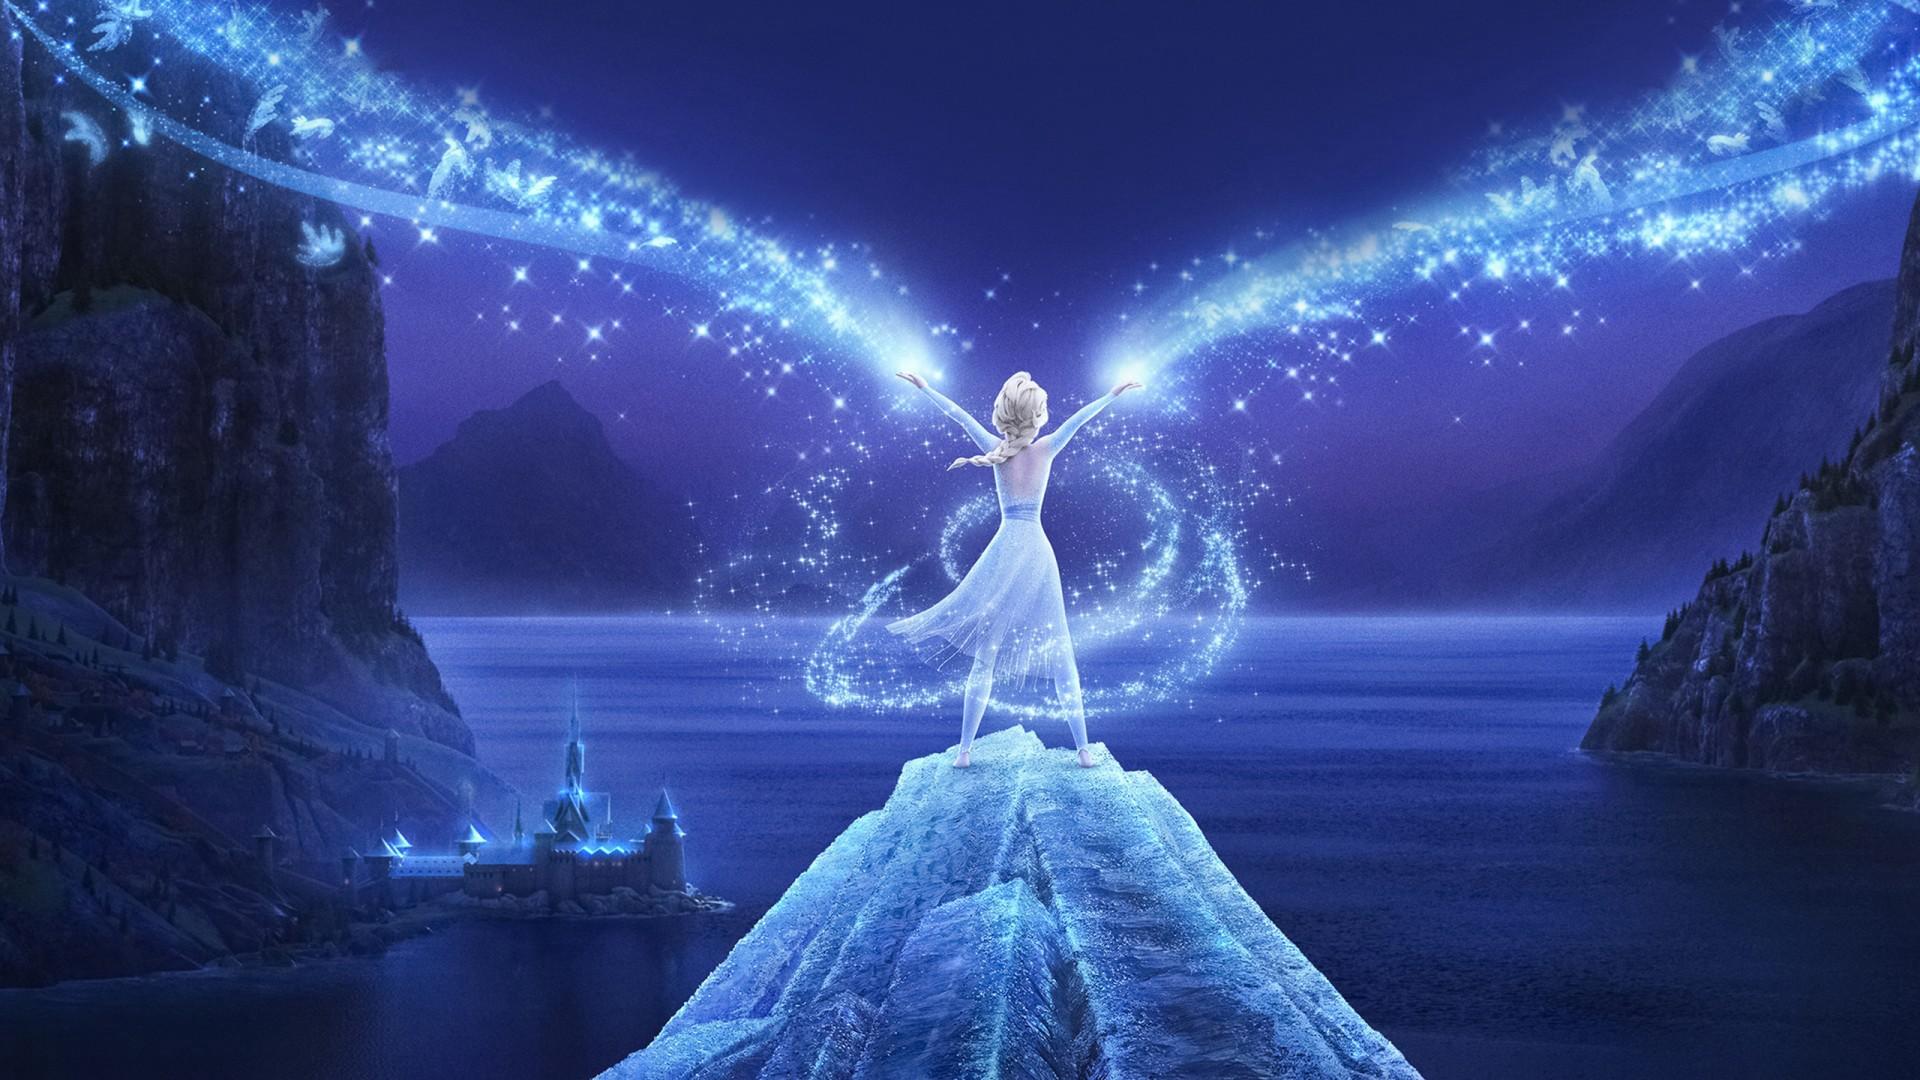 Queen Elsa n Frozen 2 Wallpaper HD. by HDwallpaper. co